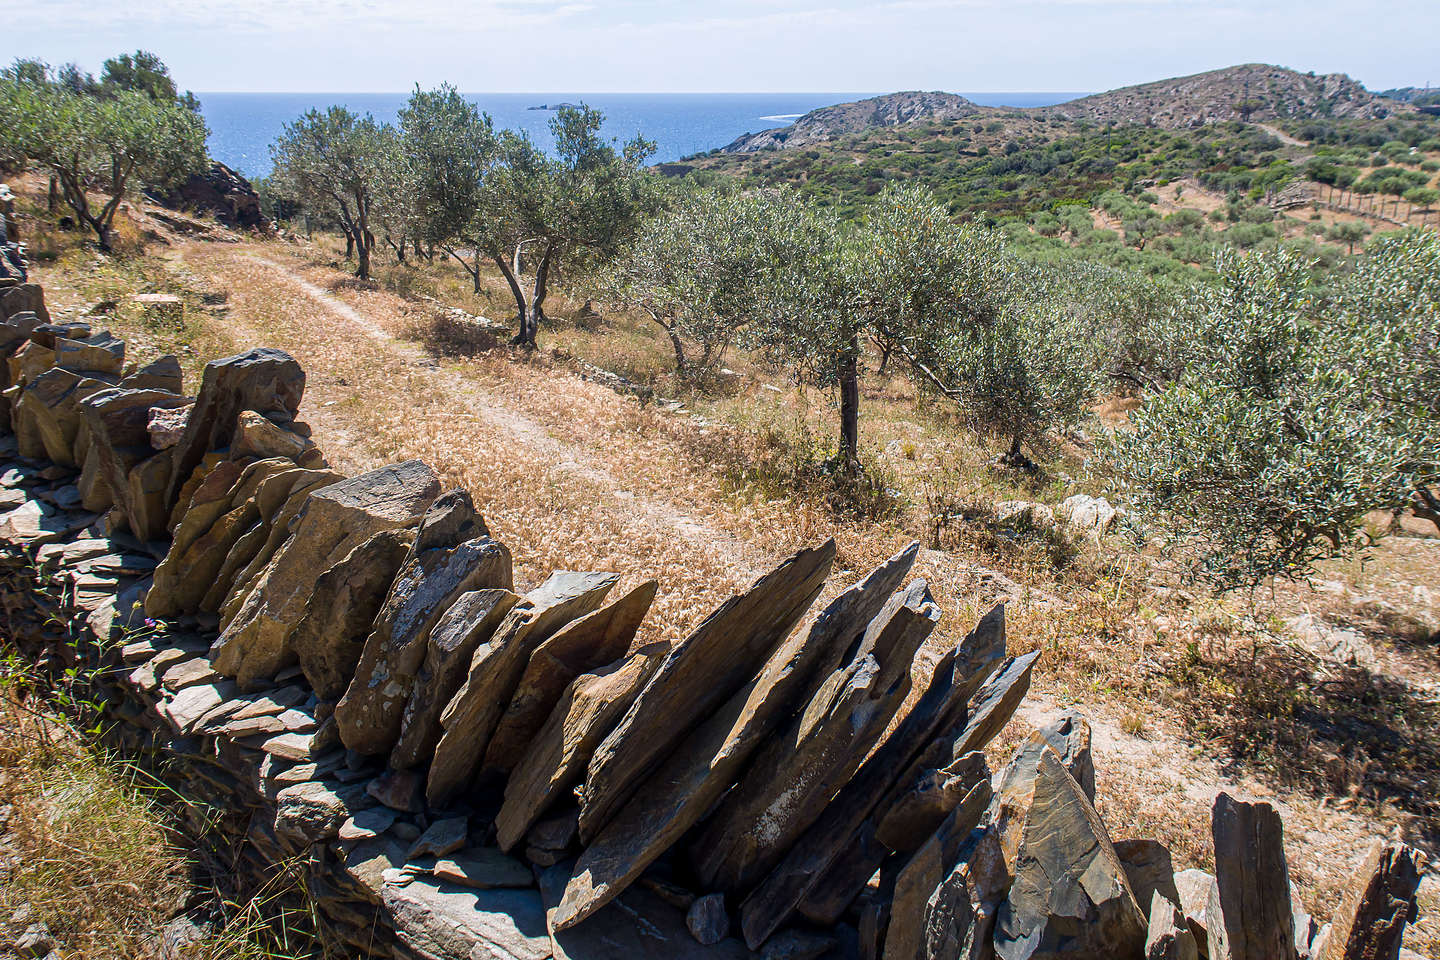 Heading off through olive groves along the Cap de Creus trail